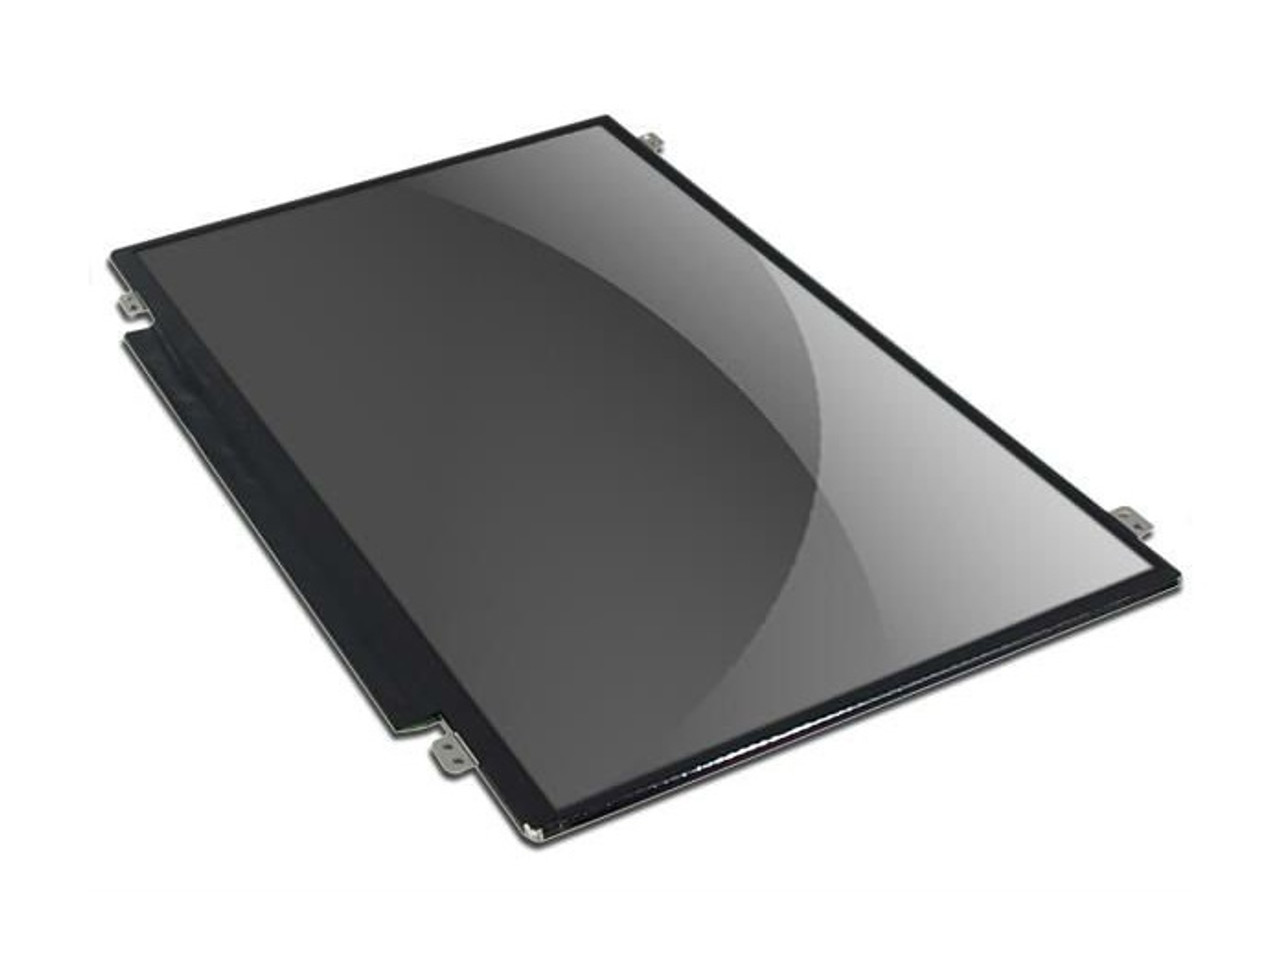 82EPH - Dell 14.1-inch (1400x1050) SXGA+ TFT Active Matrix LCD Panel for Inspiron 8000 8100 8200 Latitude C800 C810 (Refurbished)